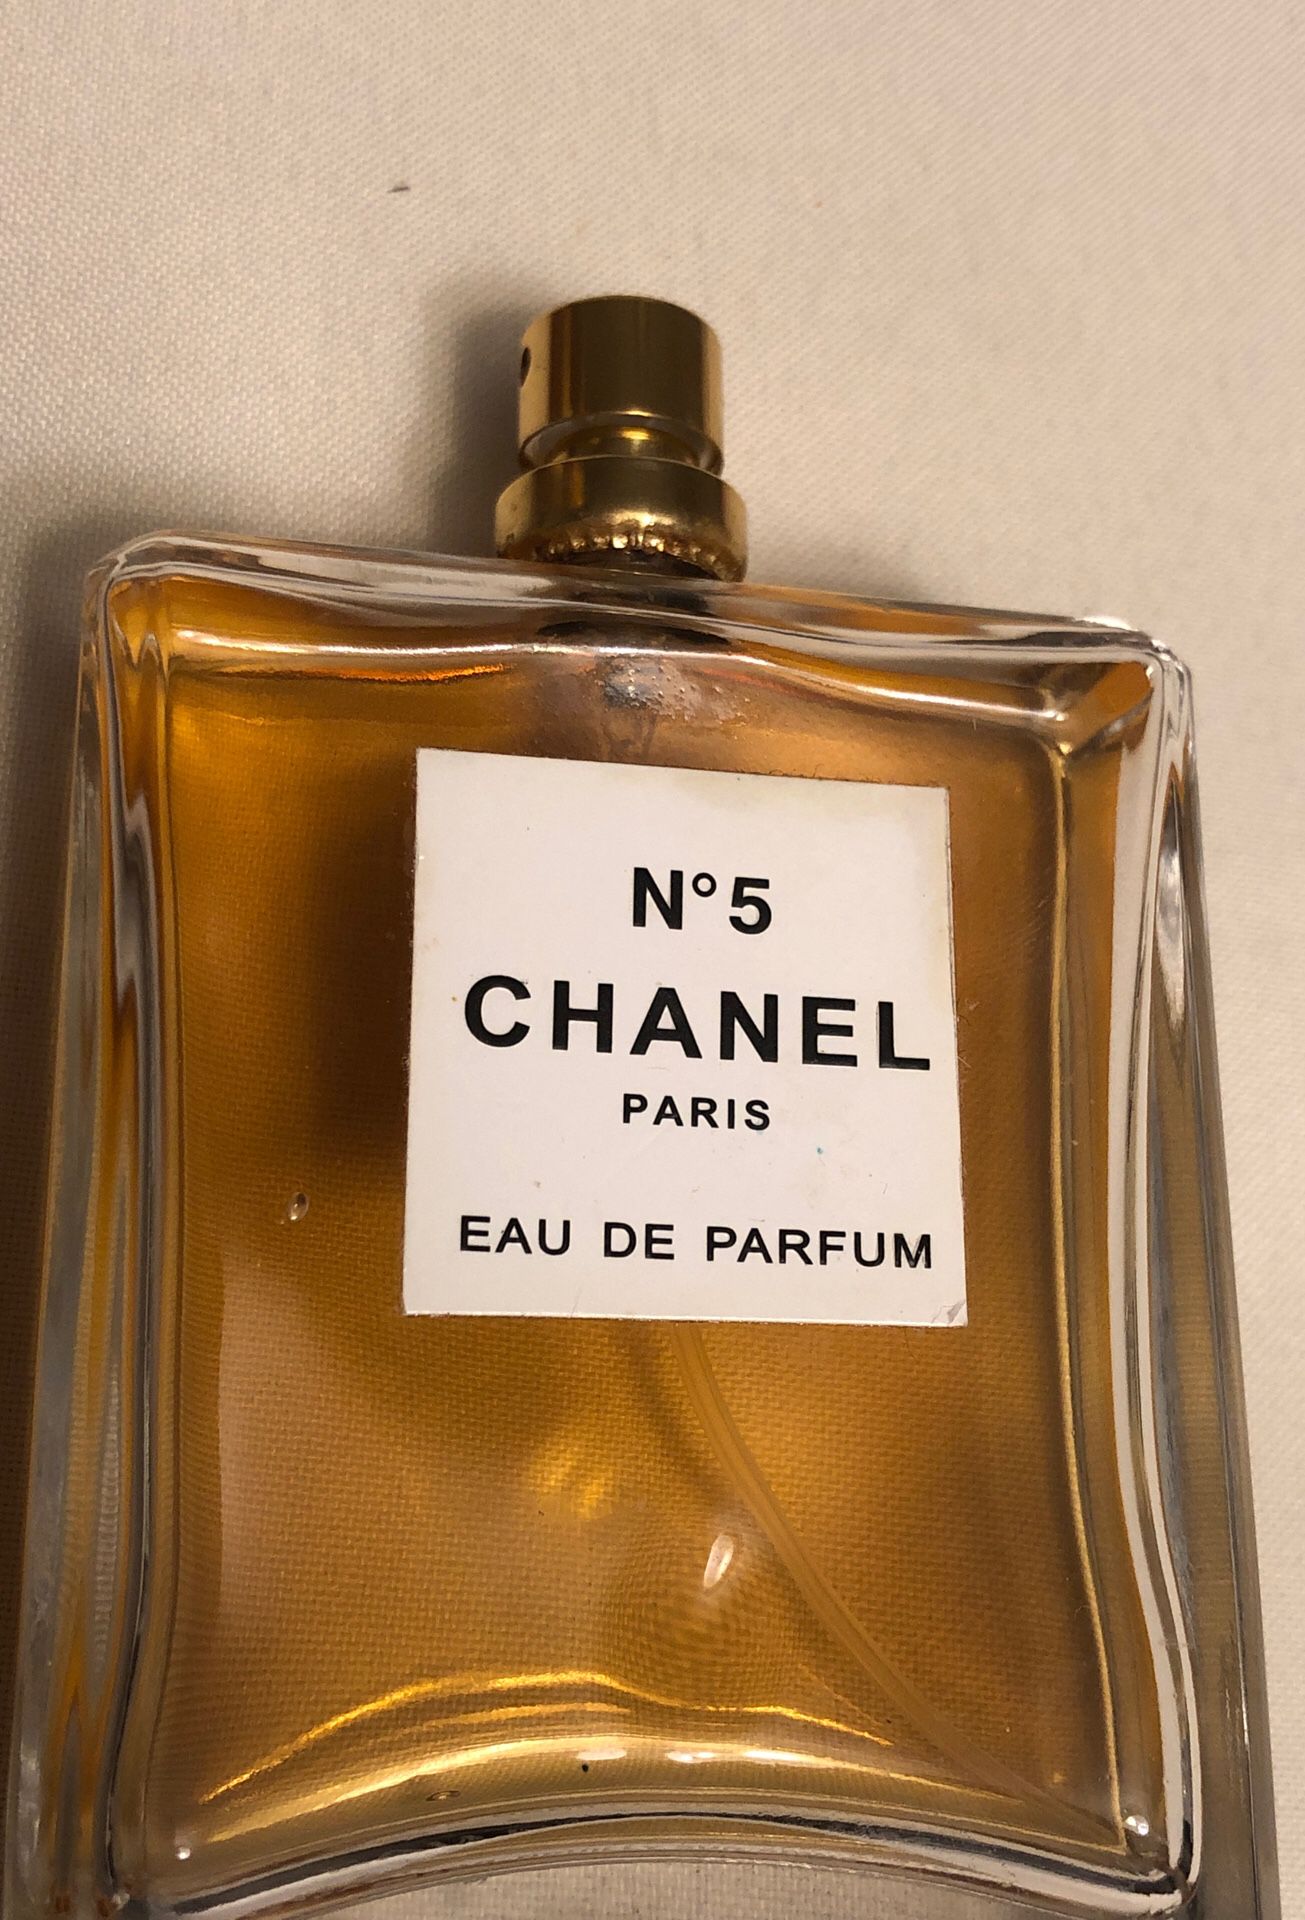 No 5 Chanel perfume